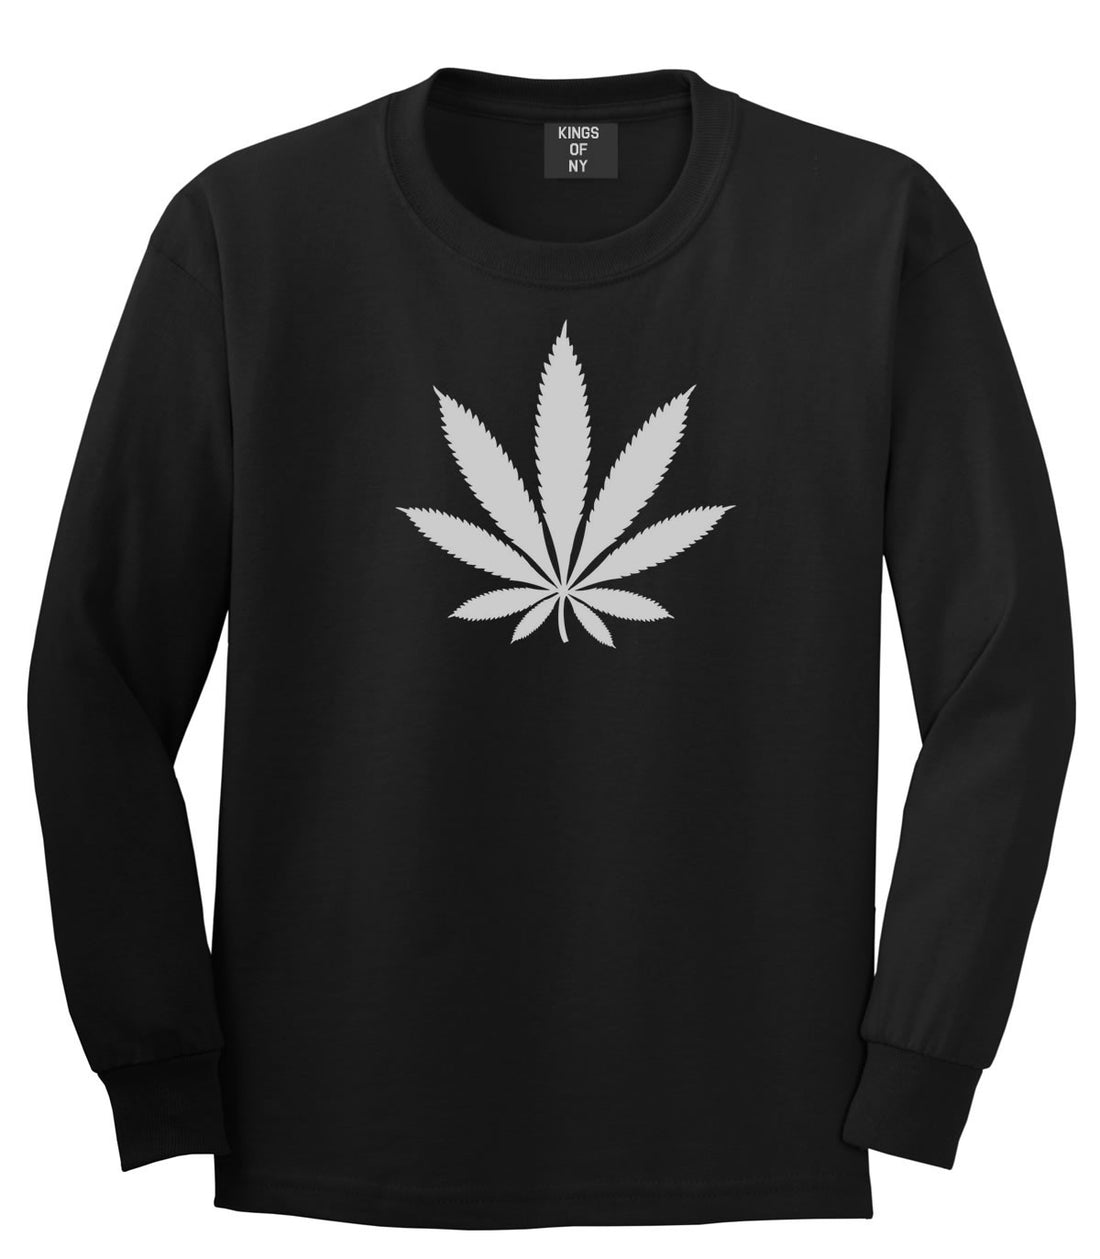 Weed Leaf Marijuana Long Sleeve T-Shirt by Kings Of NY